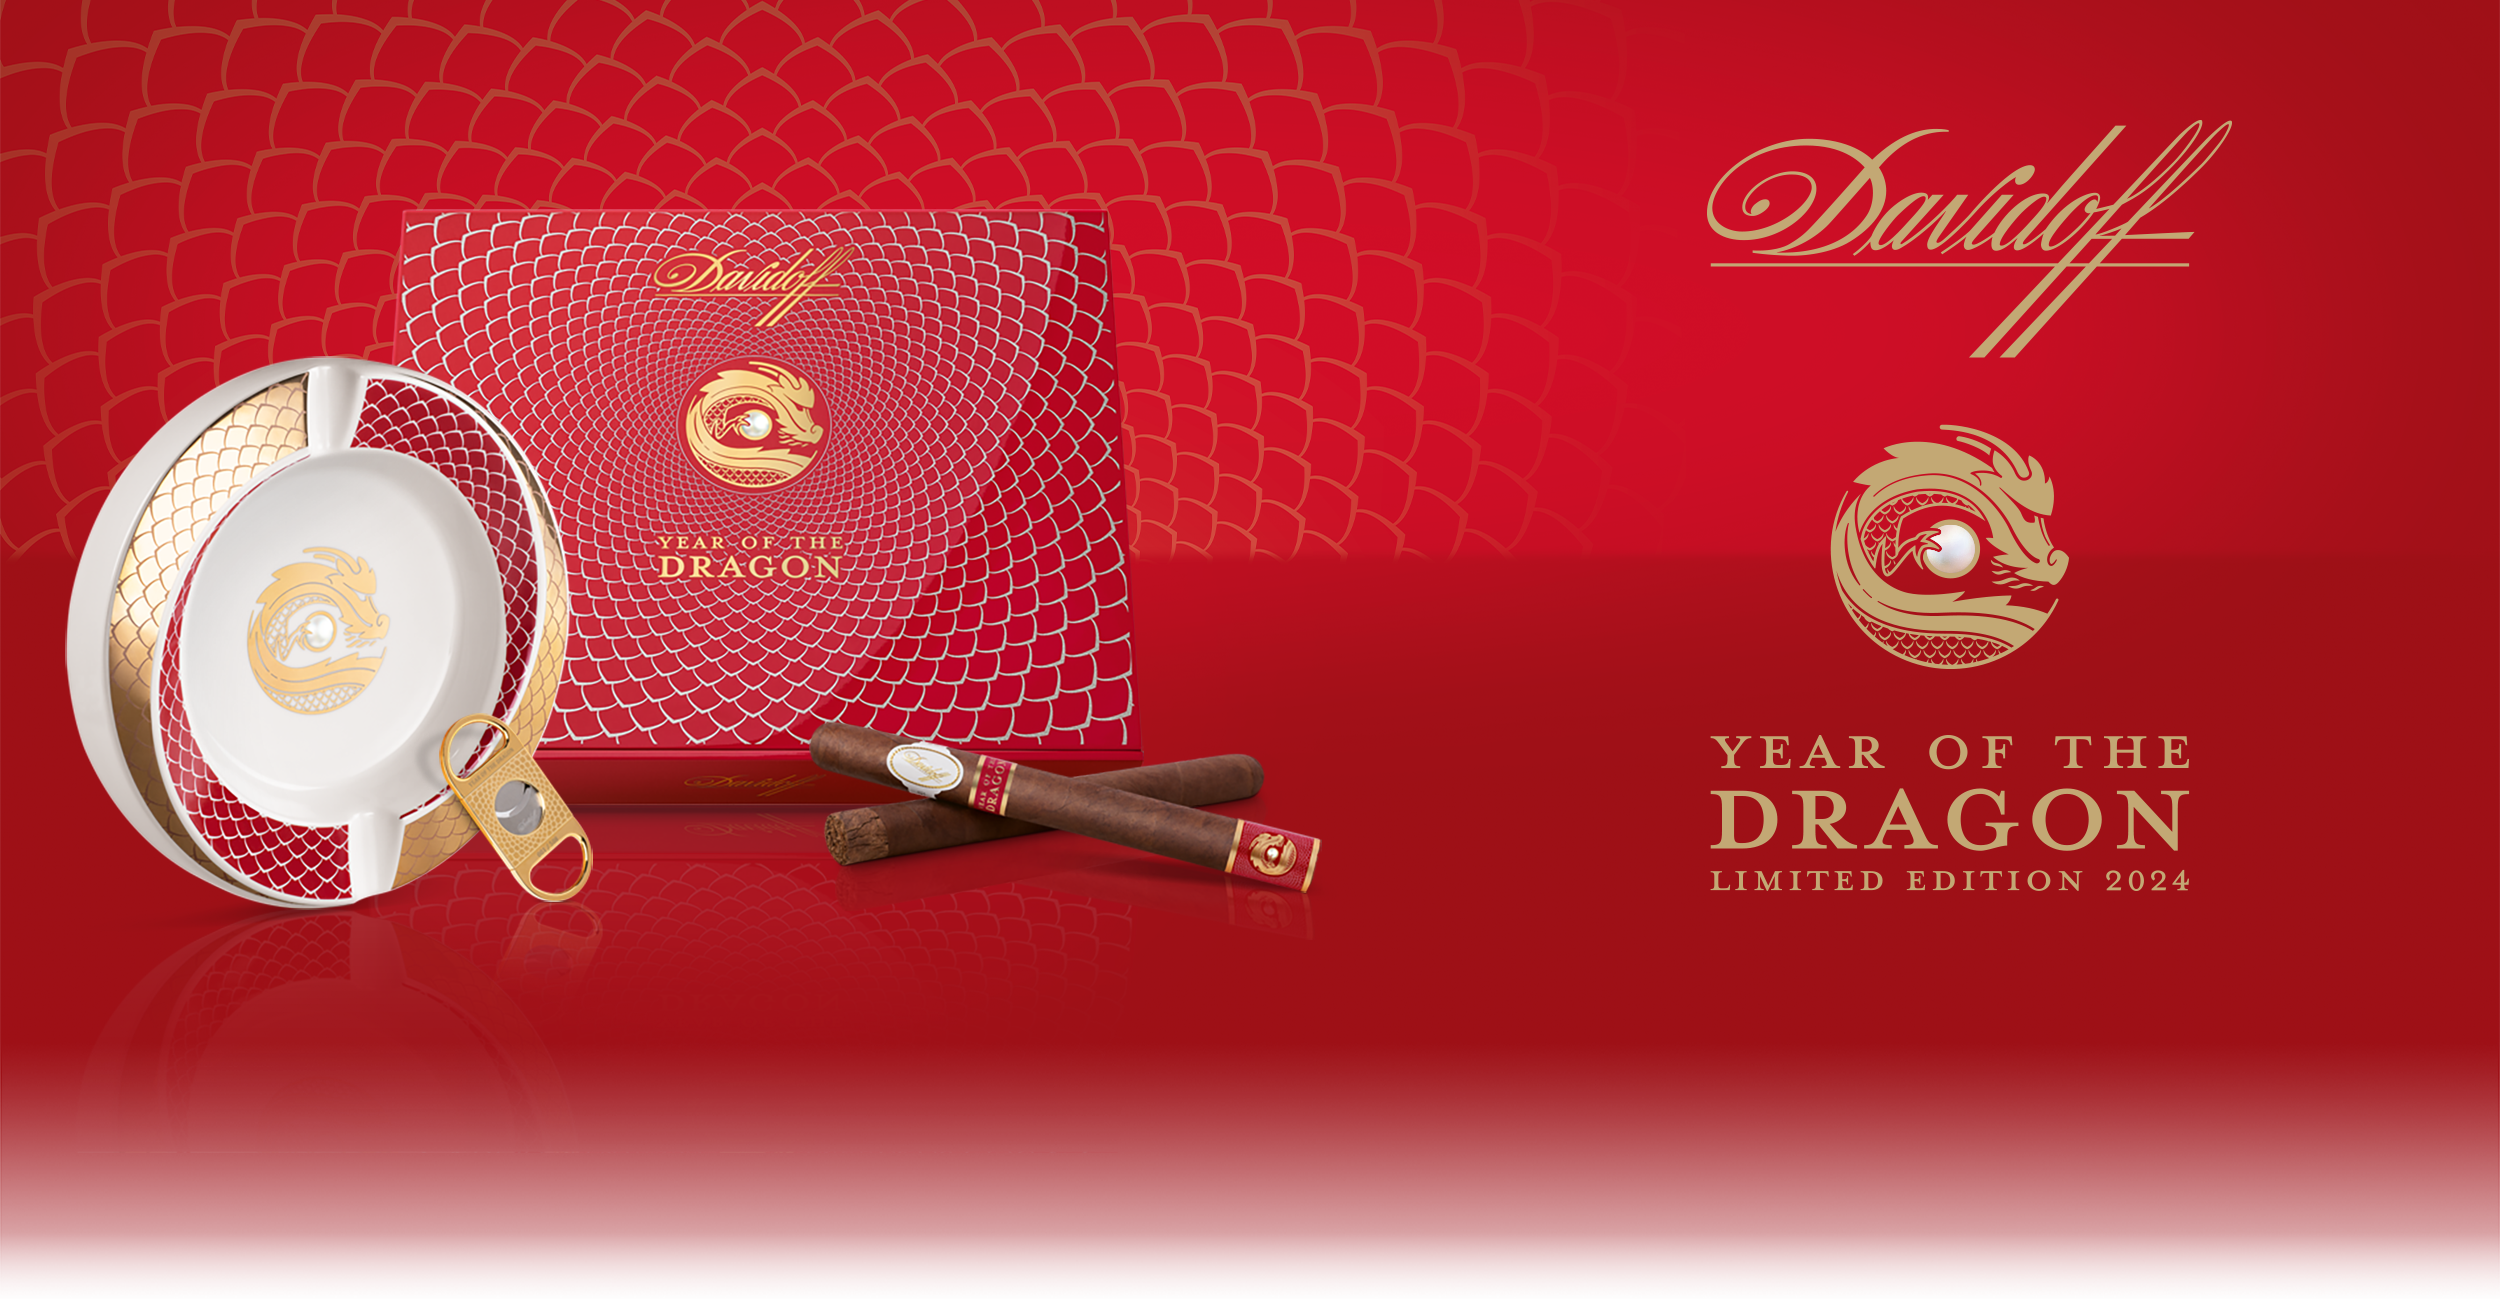 Davidoff Year of the Dragon Limited Edition 2024 - Ashtray, Cutter, Double-Corona-Zigarren und Box mit Davidoff und Year of the Dragon Limited Edition 2024 Logo